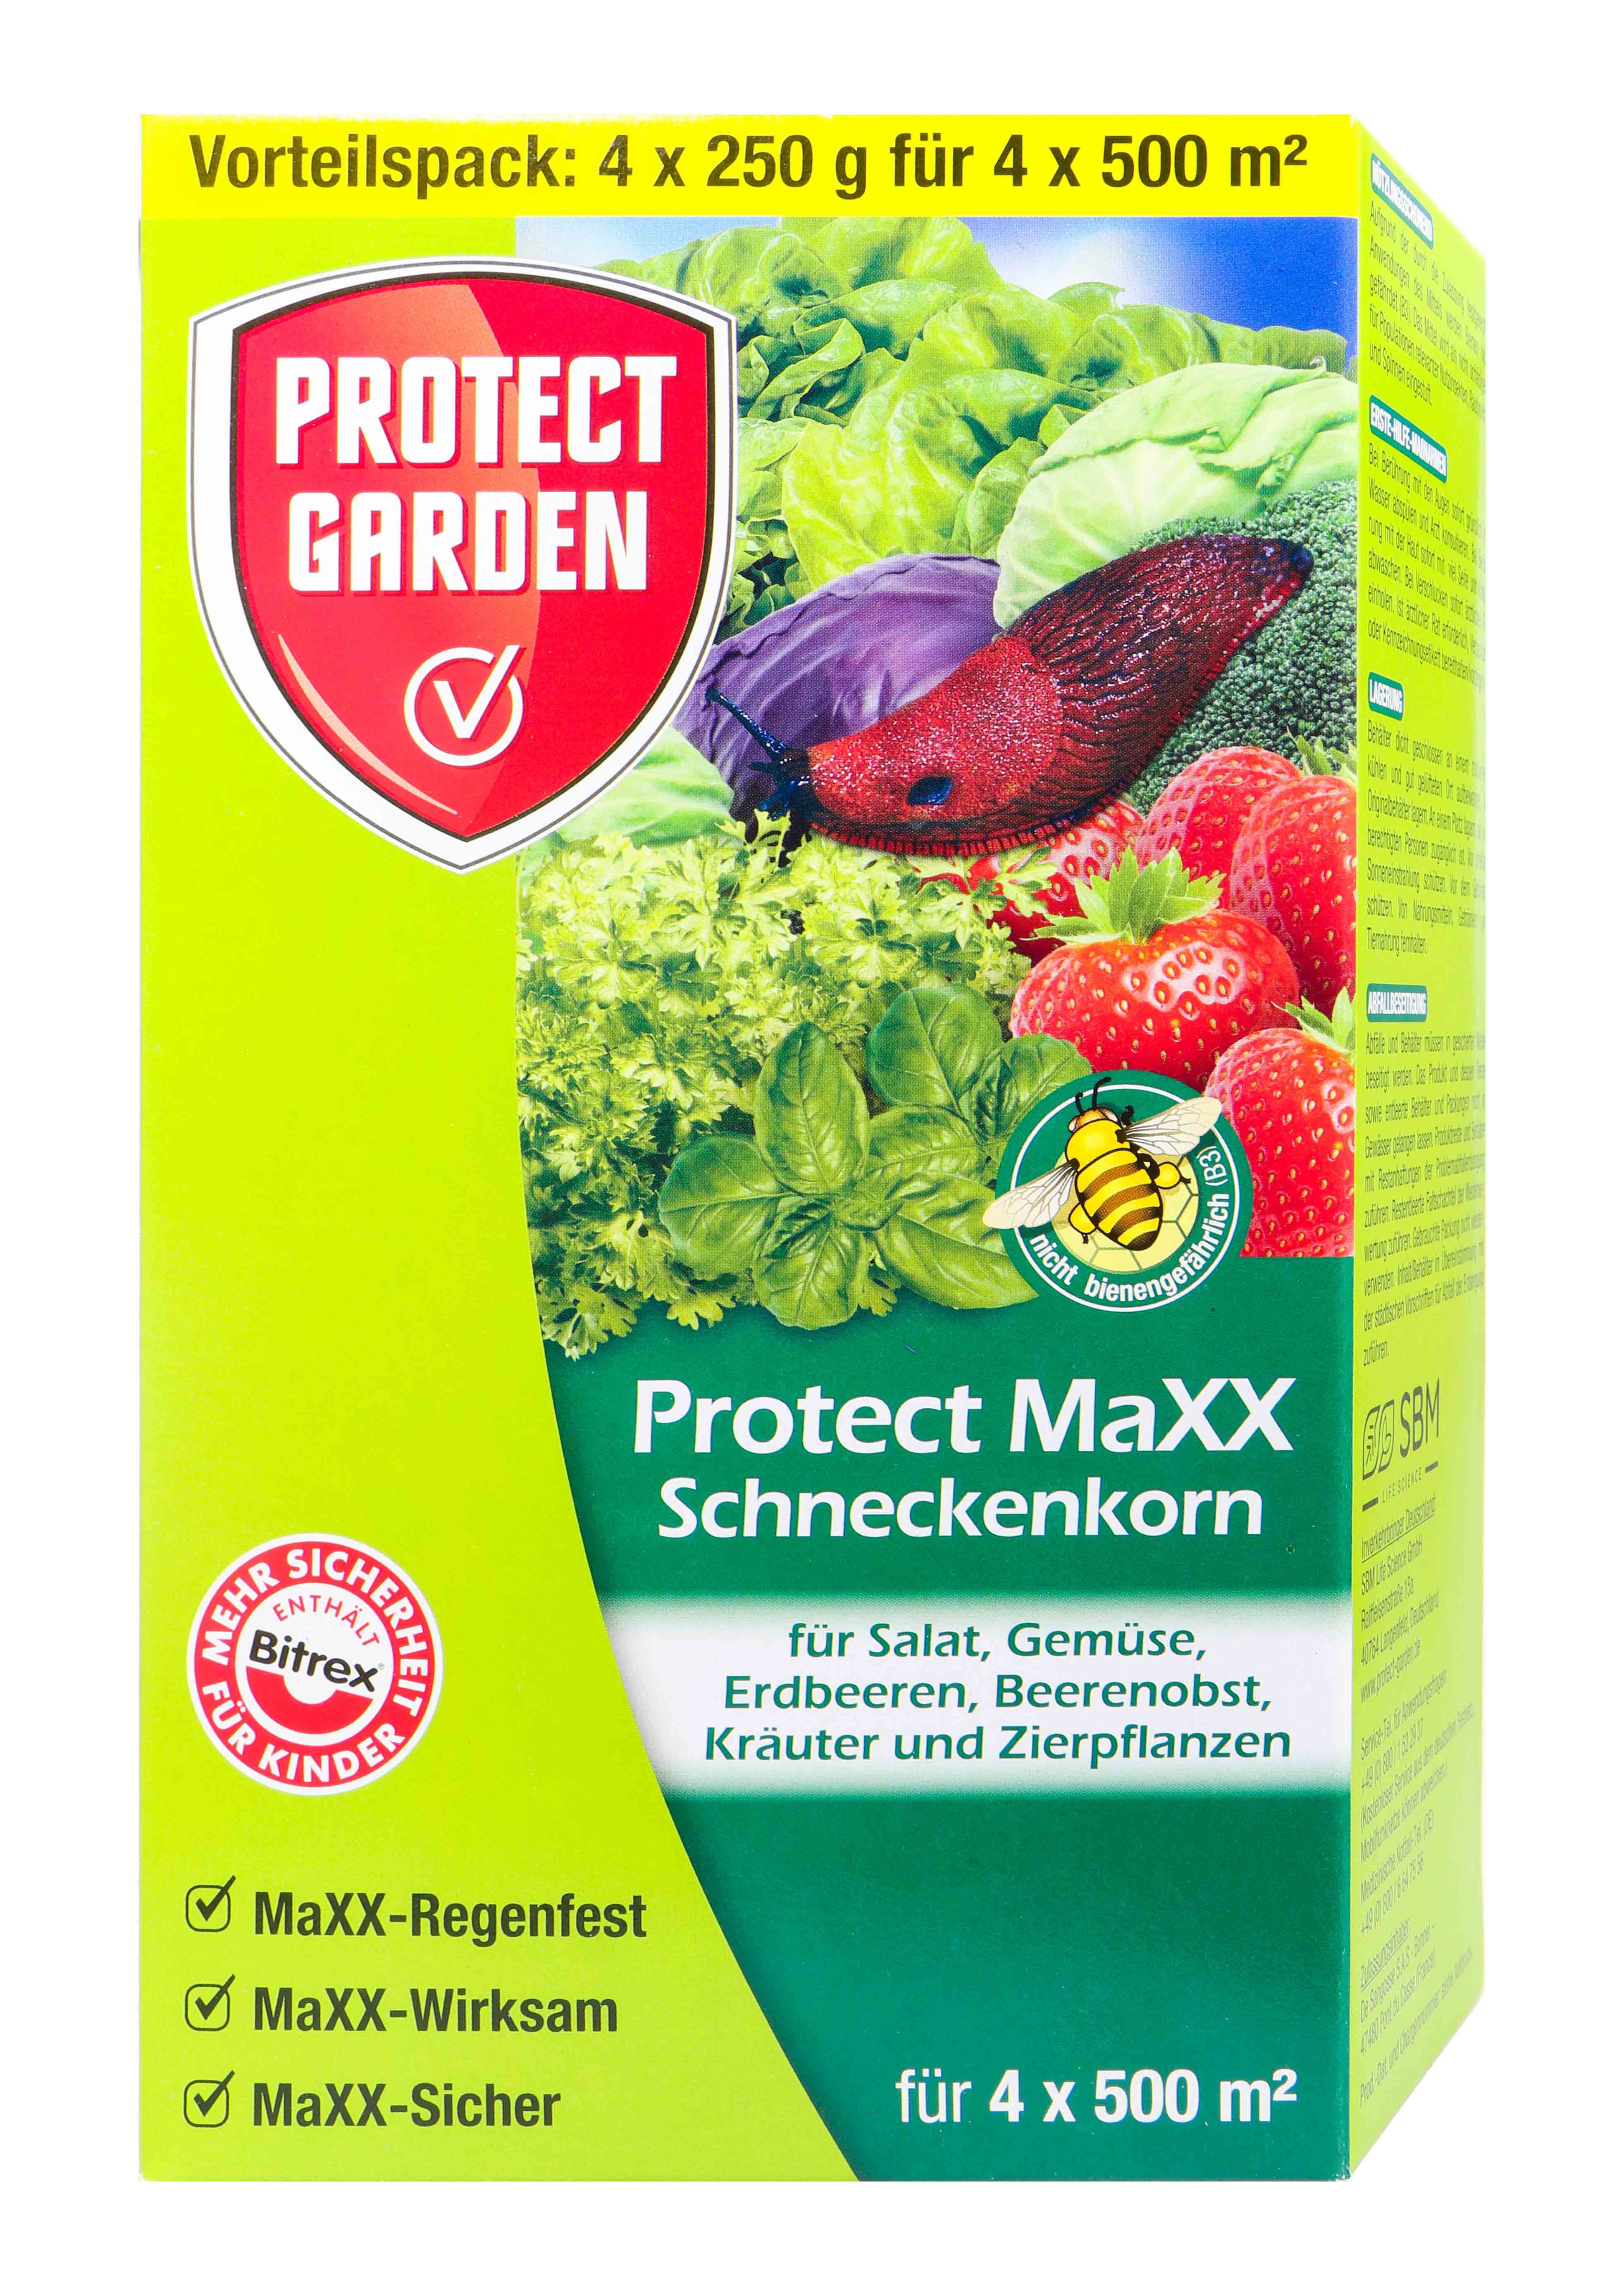 Protect Garden Schneckenkorn Protect Maxx - 1 kg